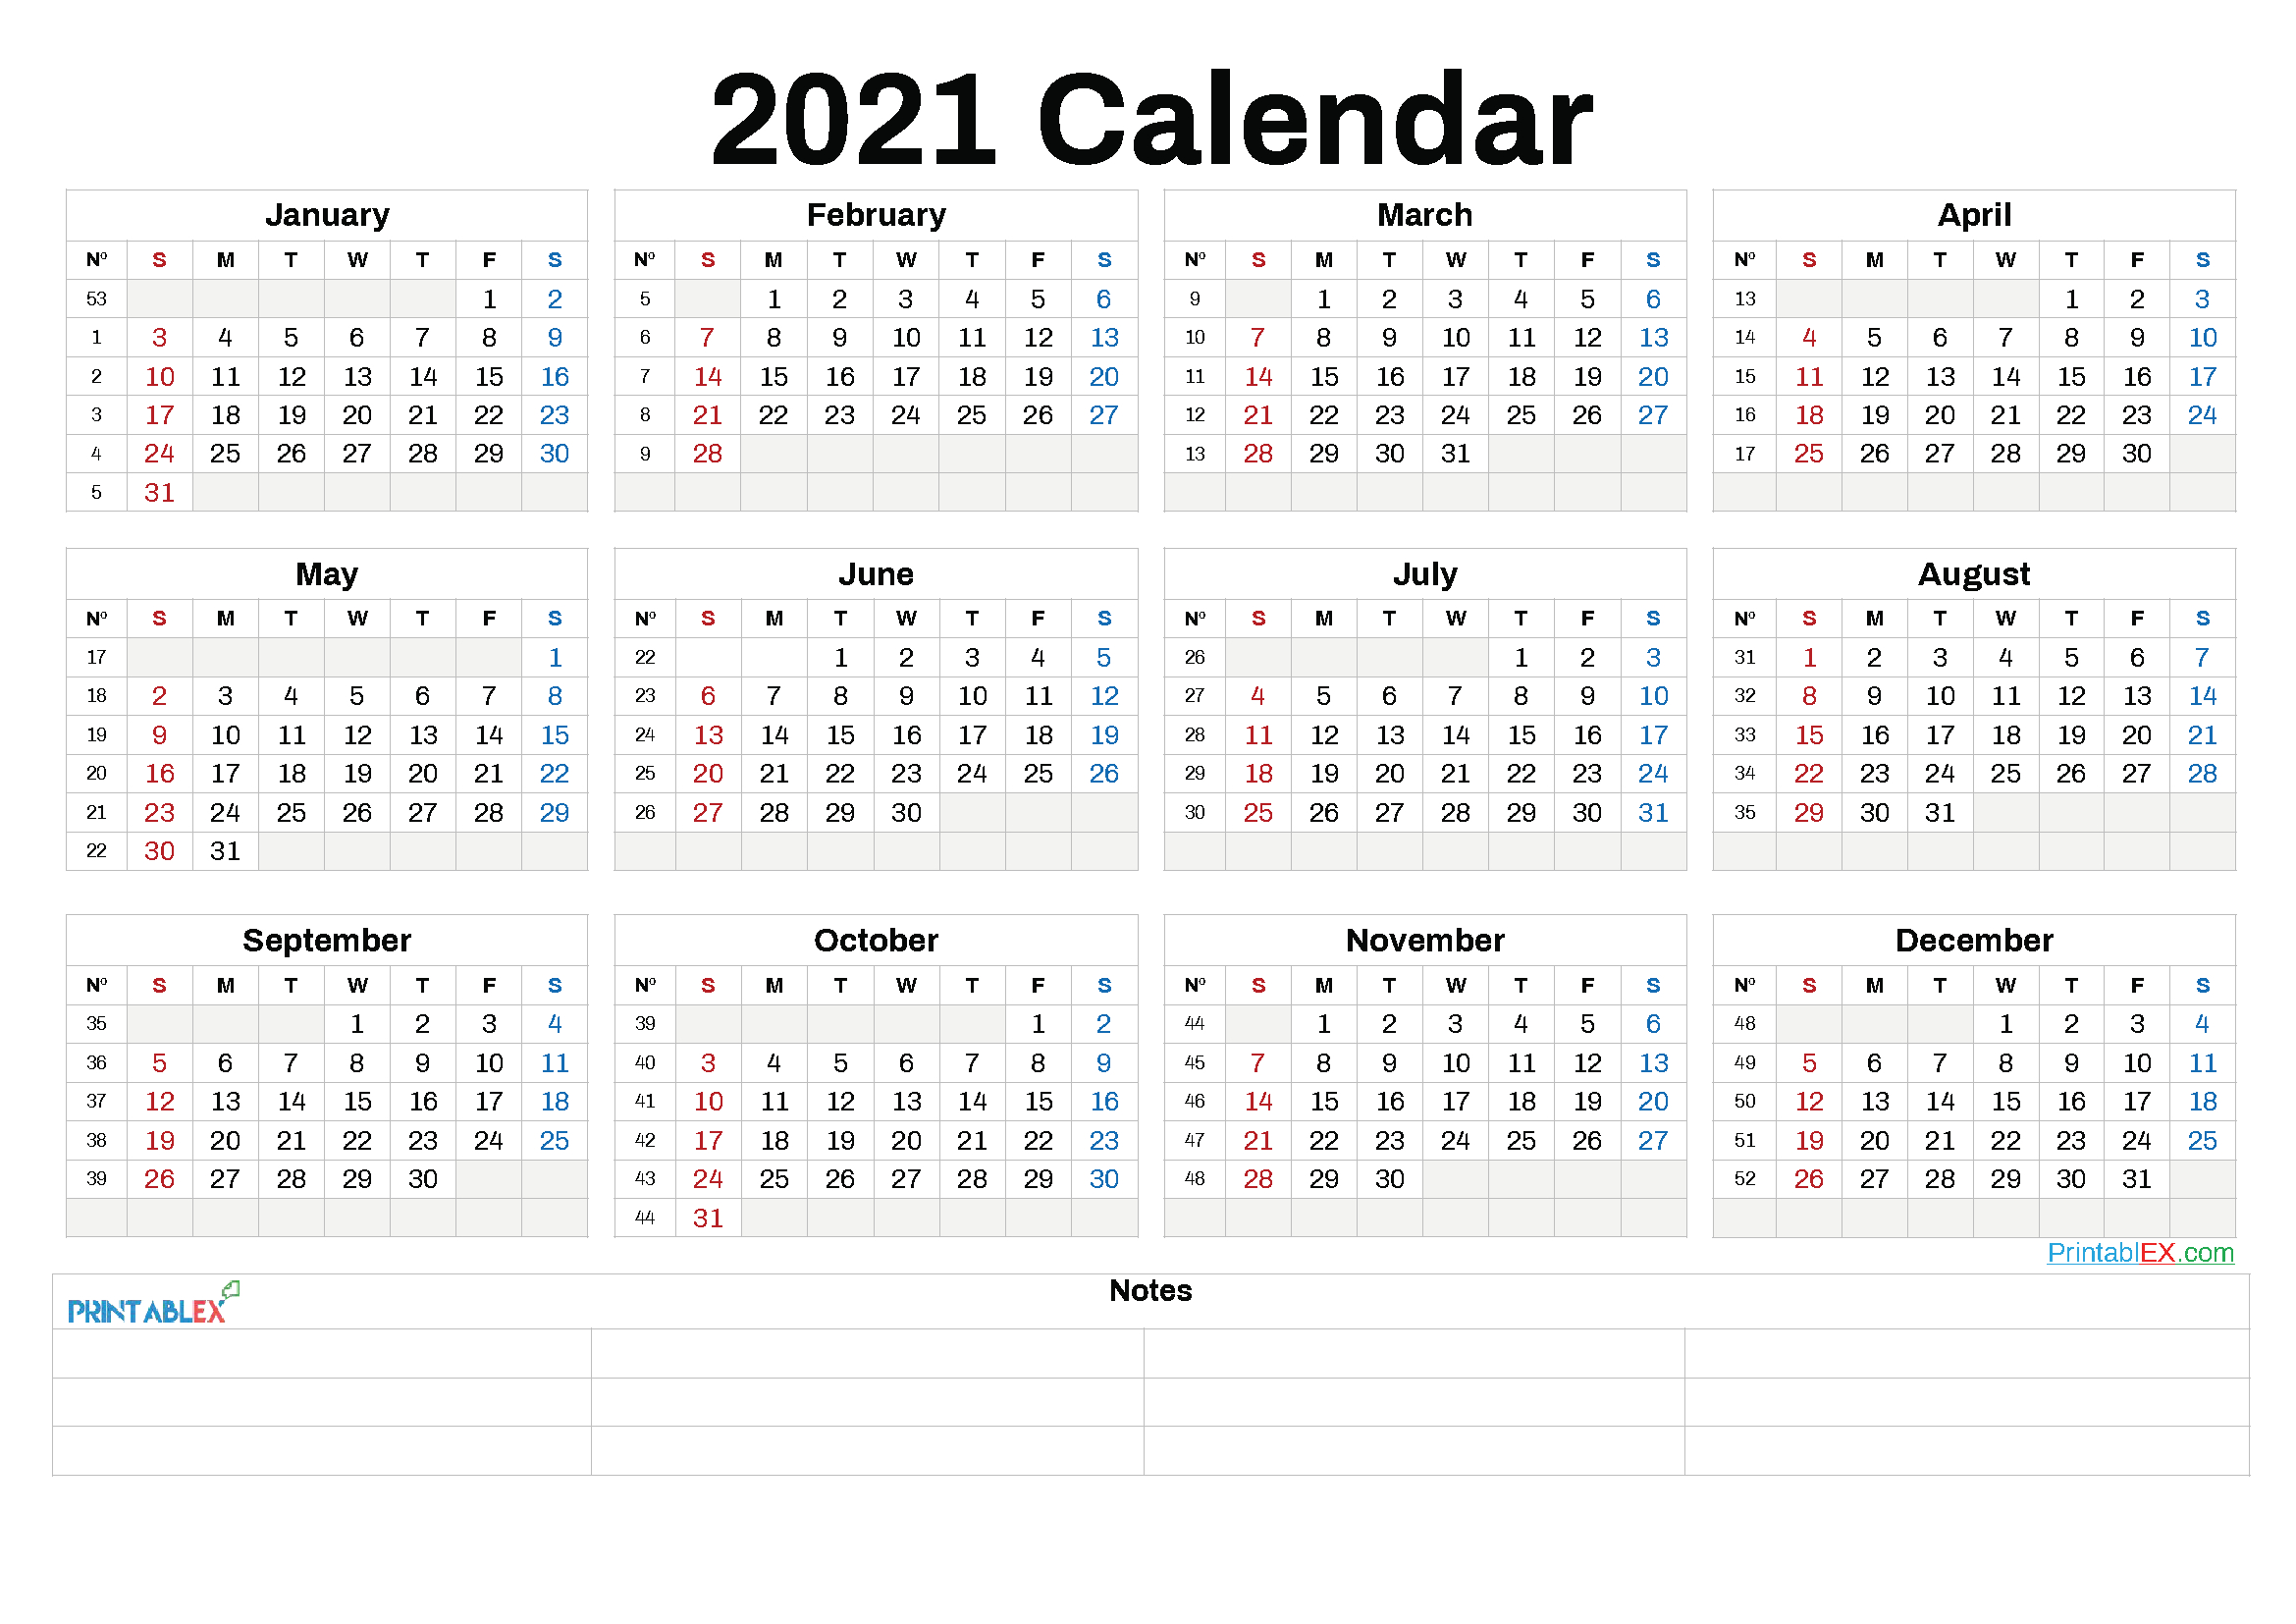 2021 Annual Calendar Printable | 2021 Printable Calendars  Full 2021 Printable Calendar